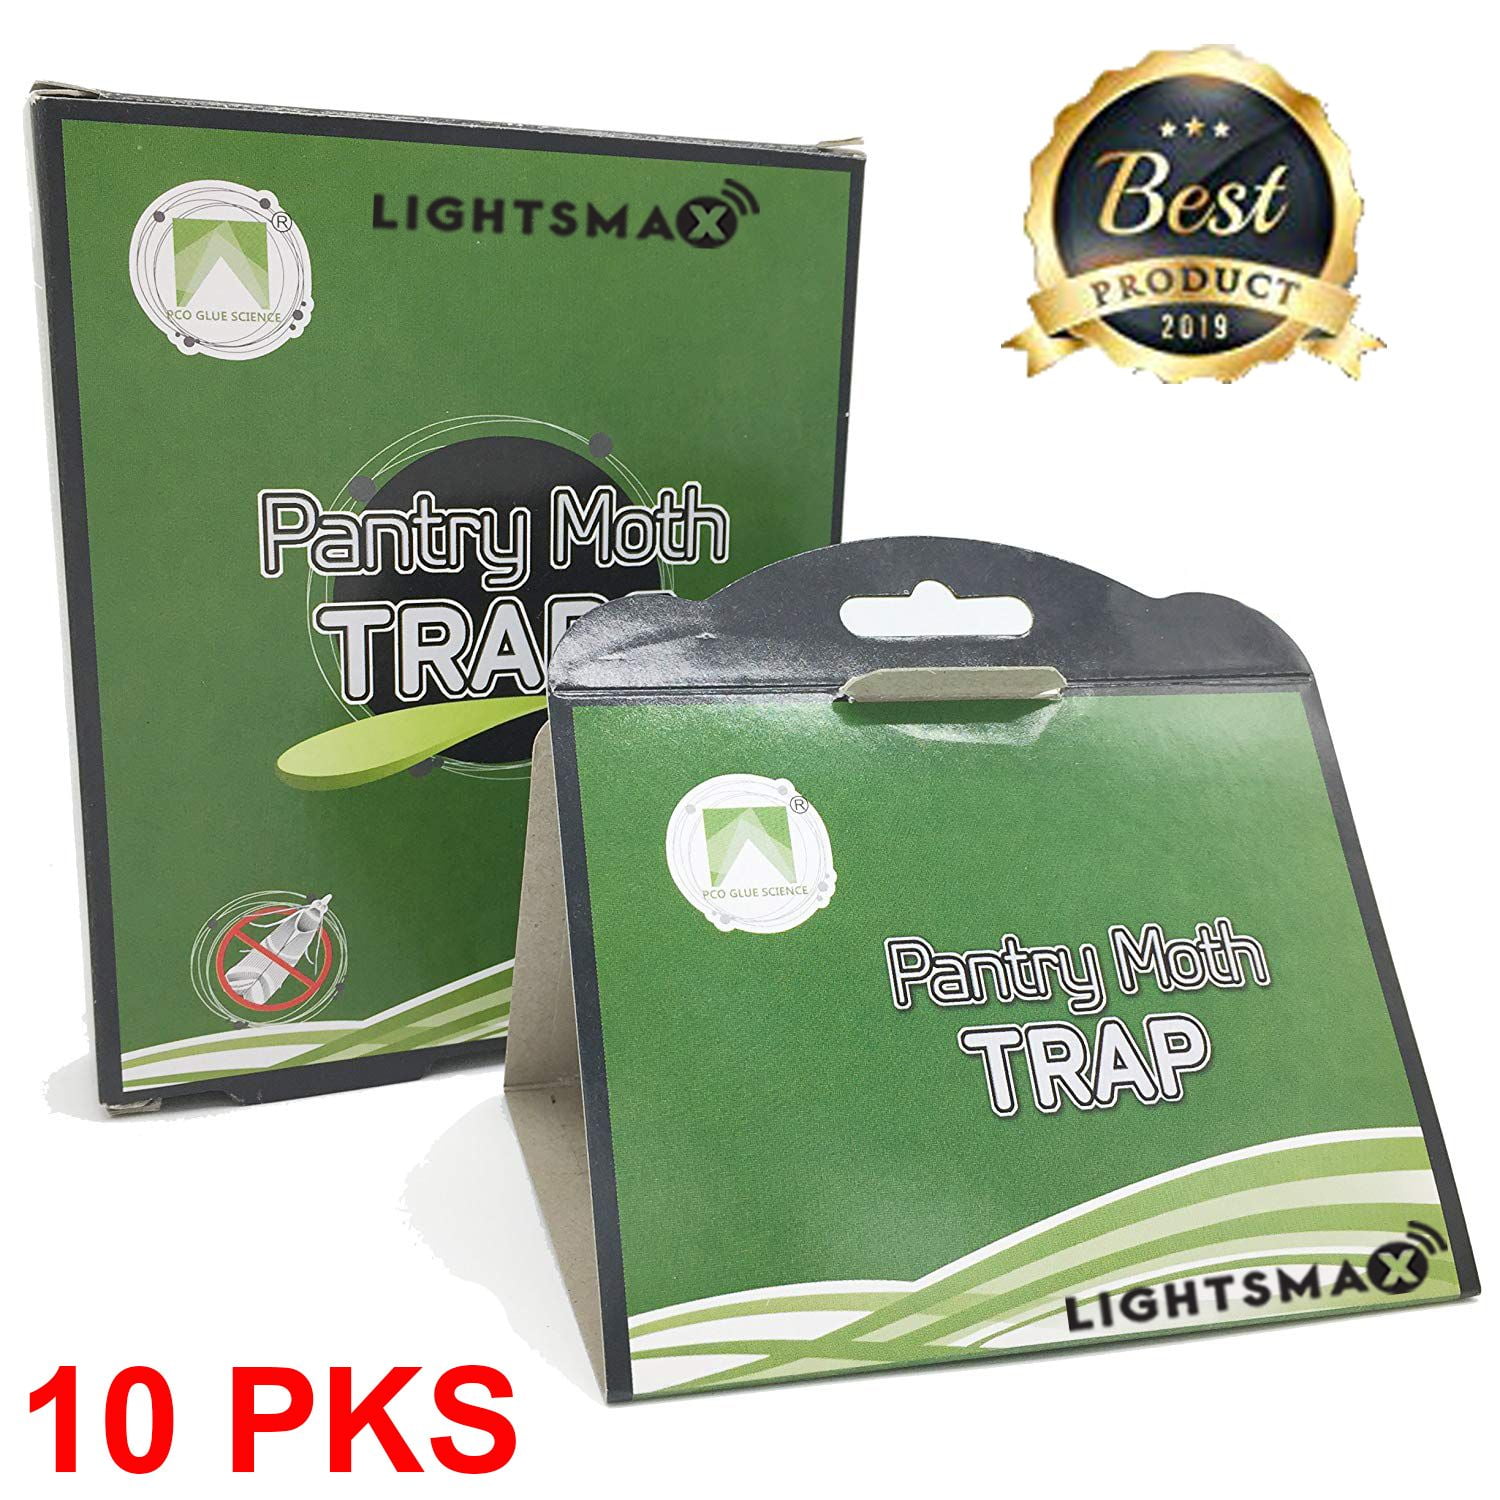 Raid Pantry Moth Trap (12-Pack), Tan